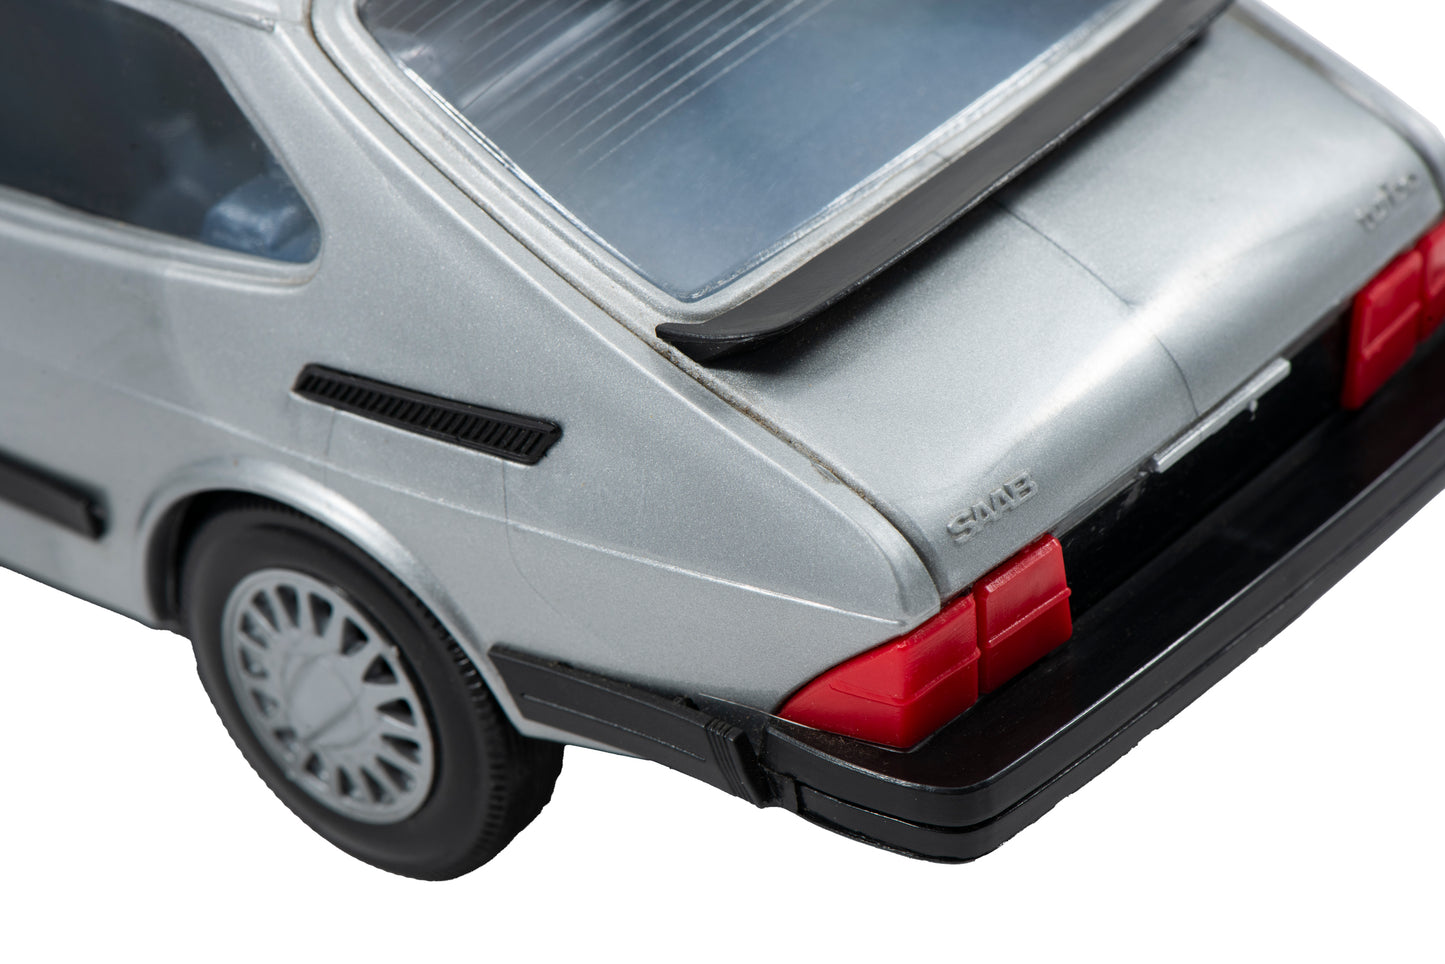 Saab 900 Turbo Coupe Dealer Promo Model Silver